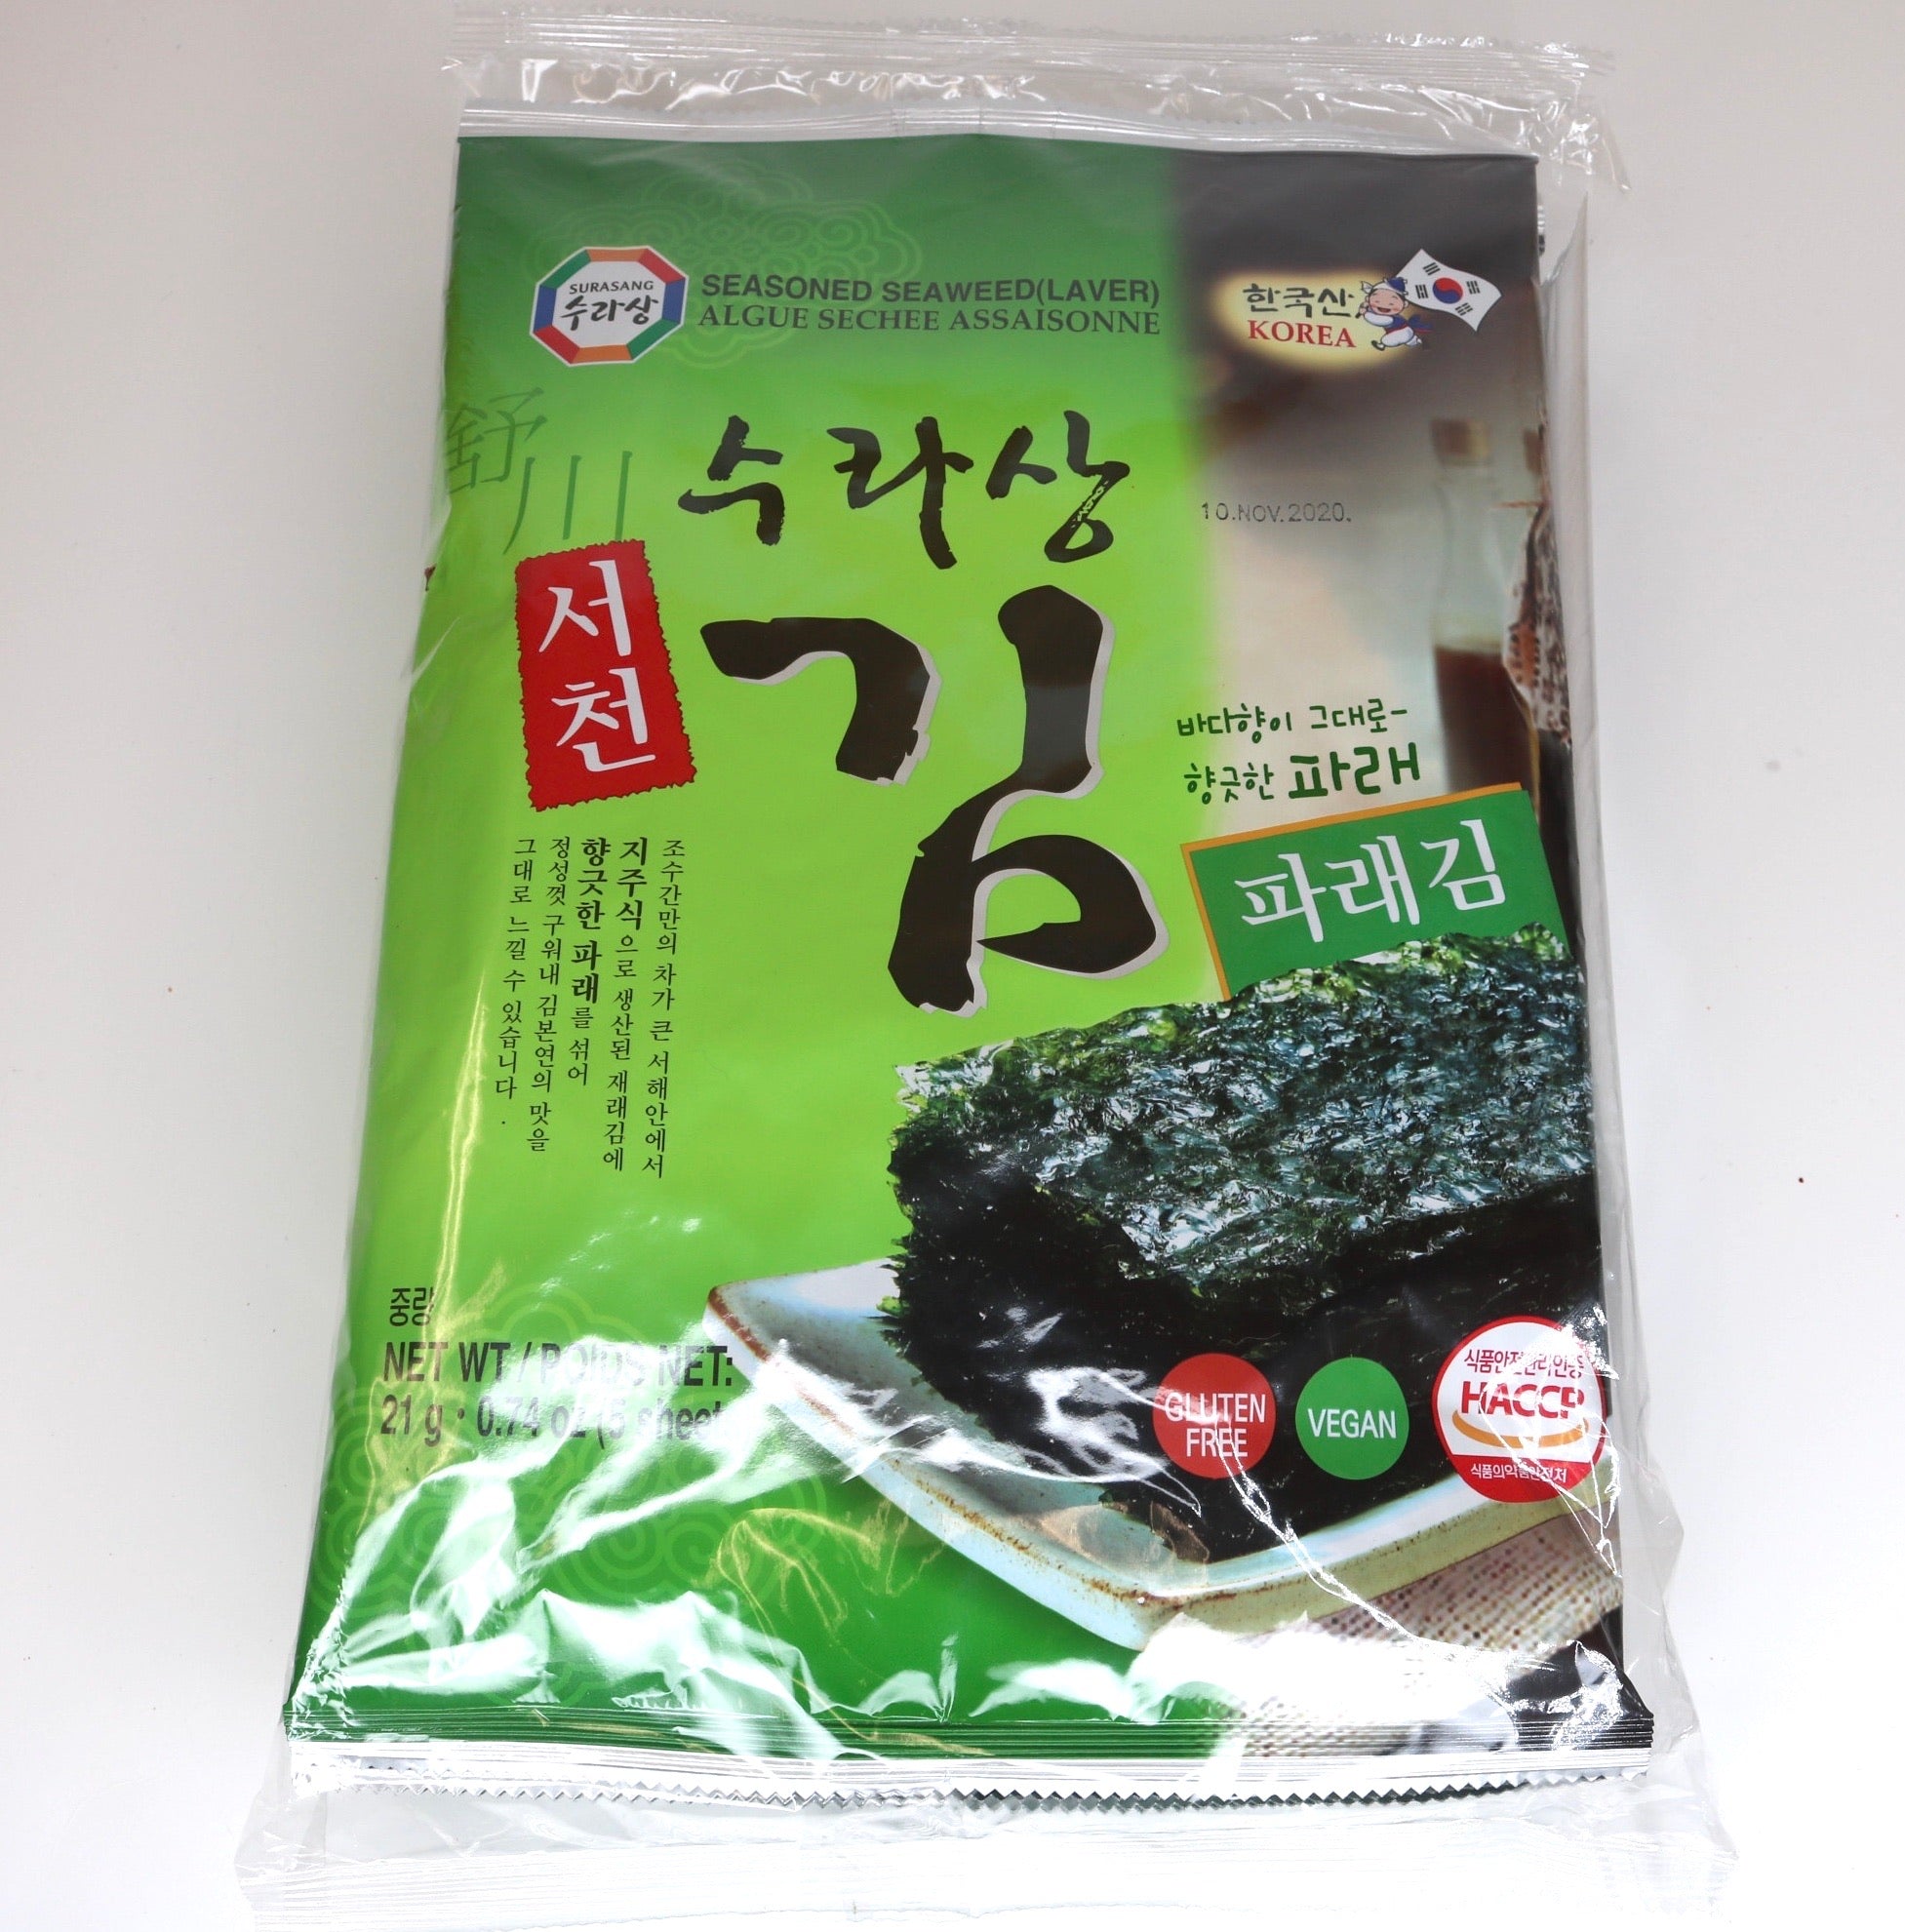 Surasang Seasoned Seaweed (Laver)(5 sheets per pack x 4) - 21g/0.74oz x 4